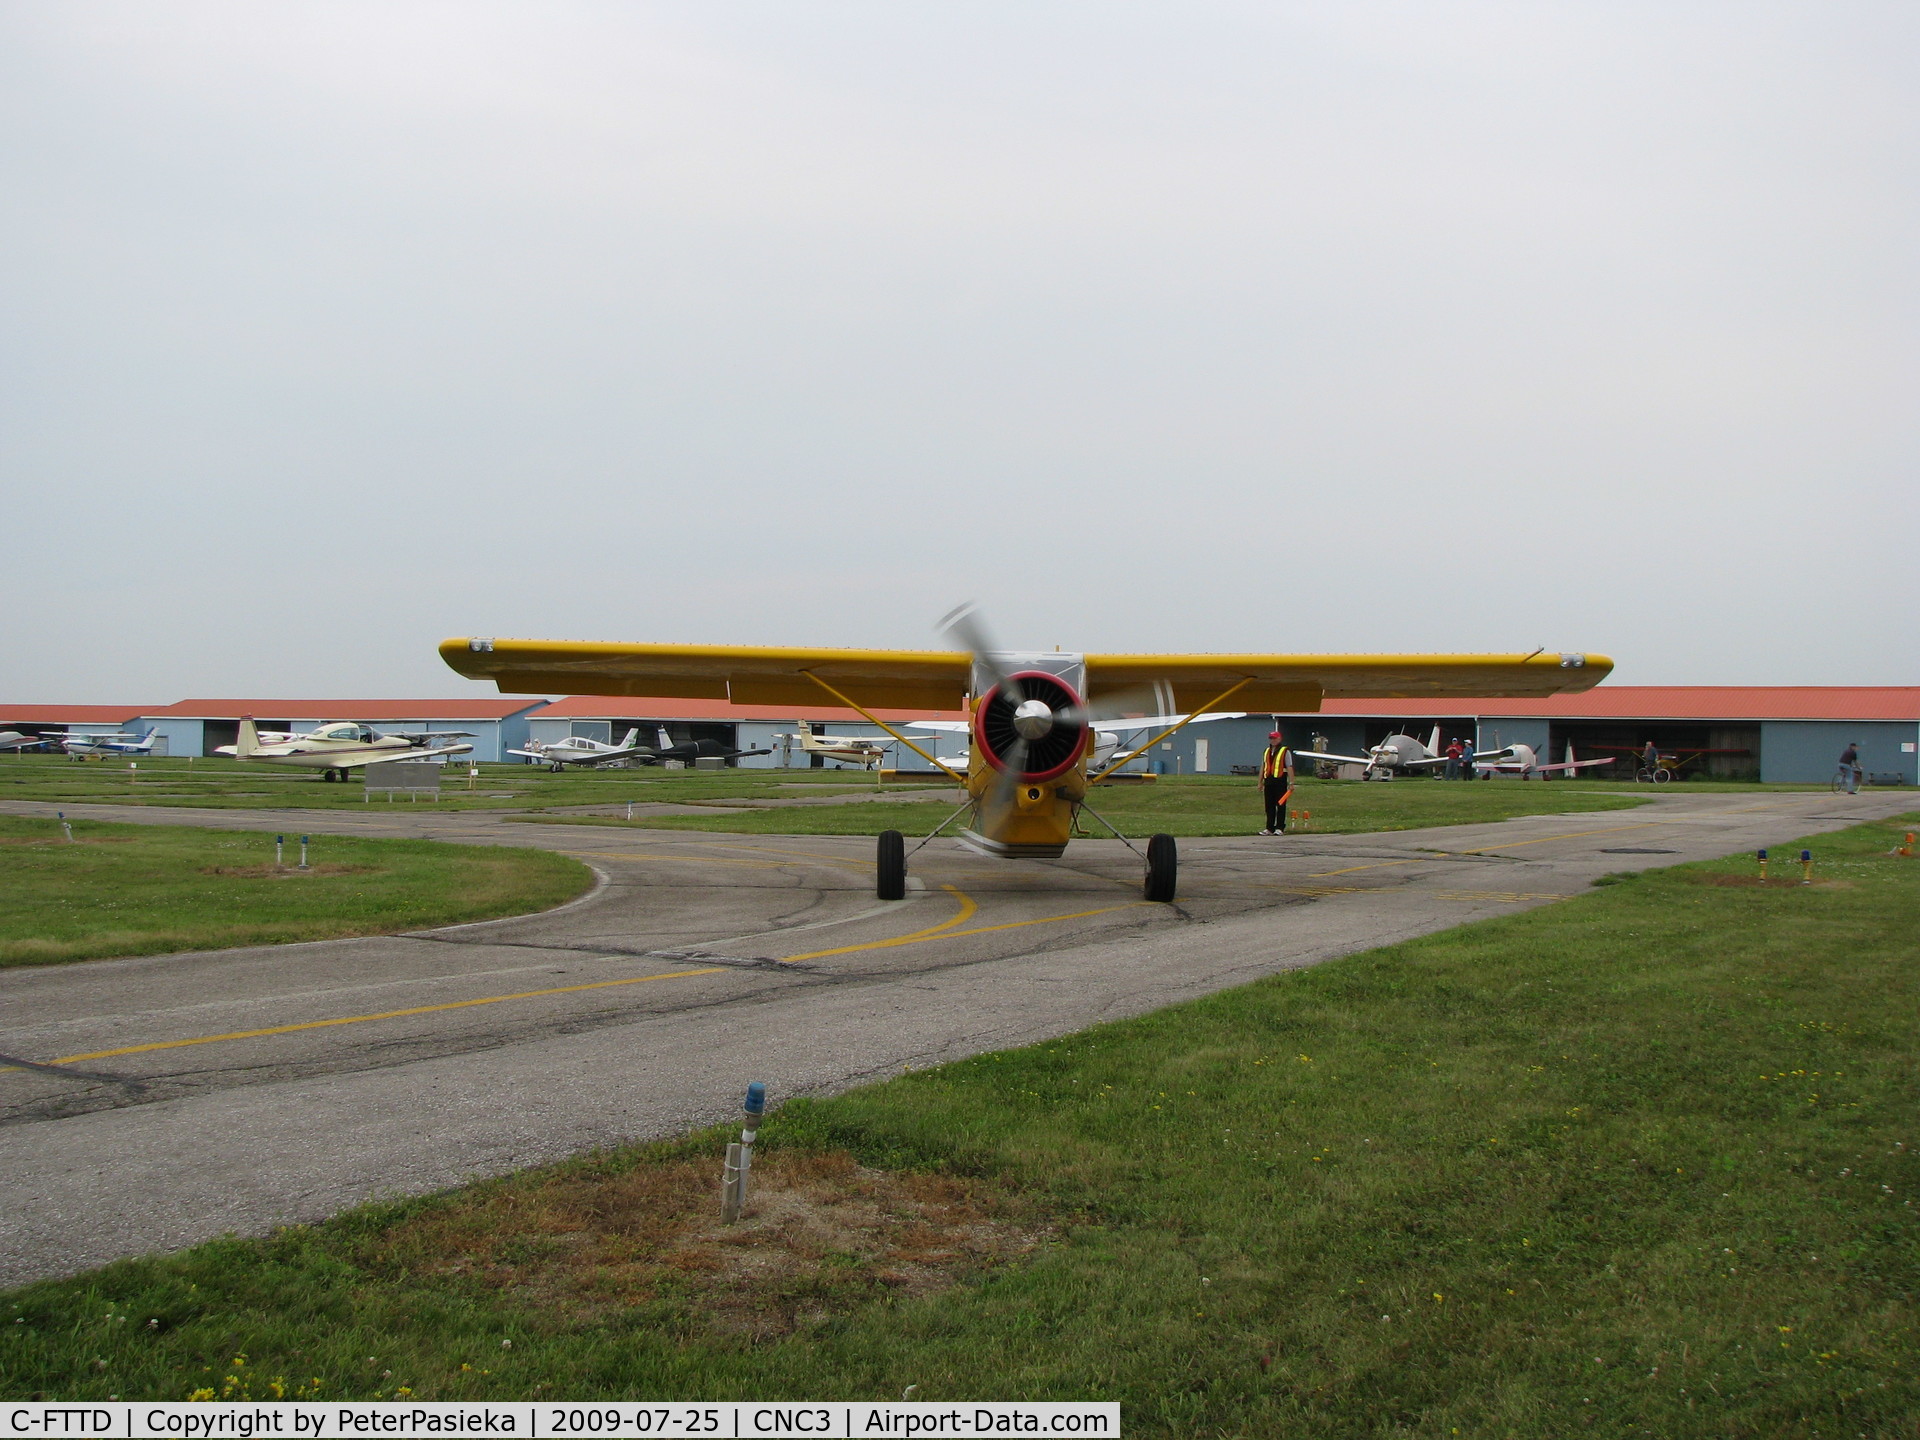 C-FTTD, 2006 Murphy SR3500 Moose C/N SR120, @ Brampton Airport